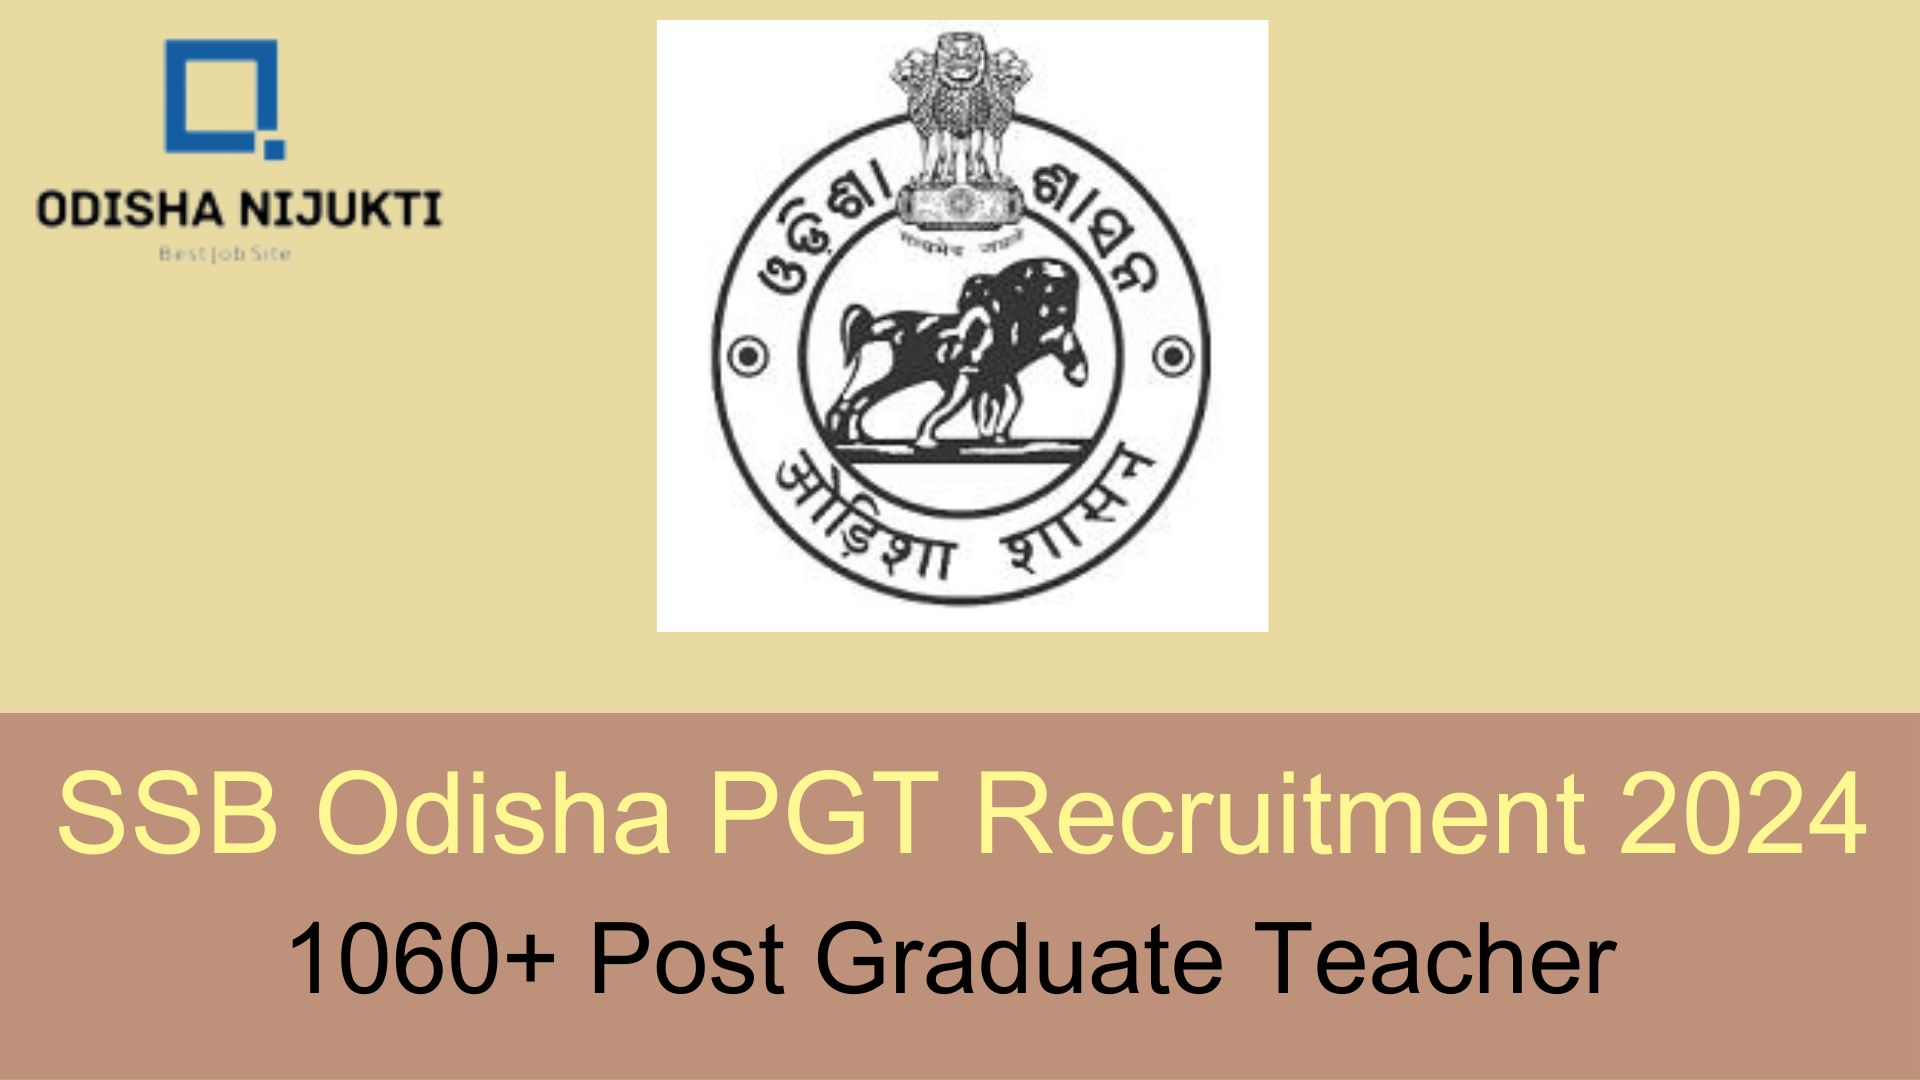 SSB-Odisha-PGT-Recruitment-2024-Notification-Posts-for-1060+-Post-Graduate-Teacher-